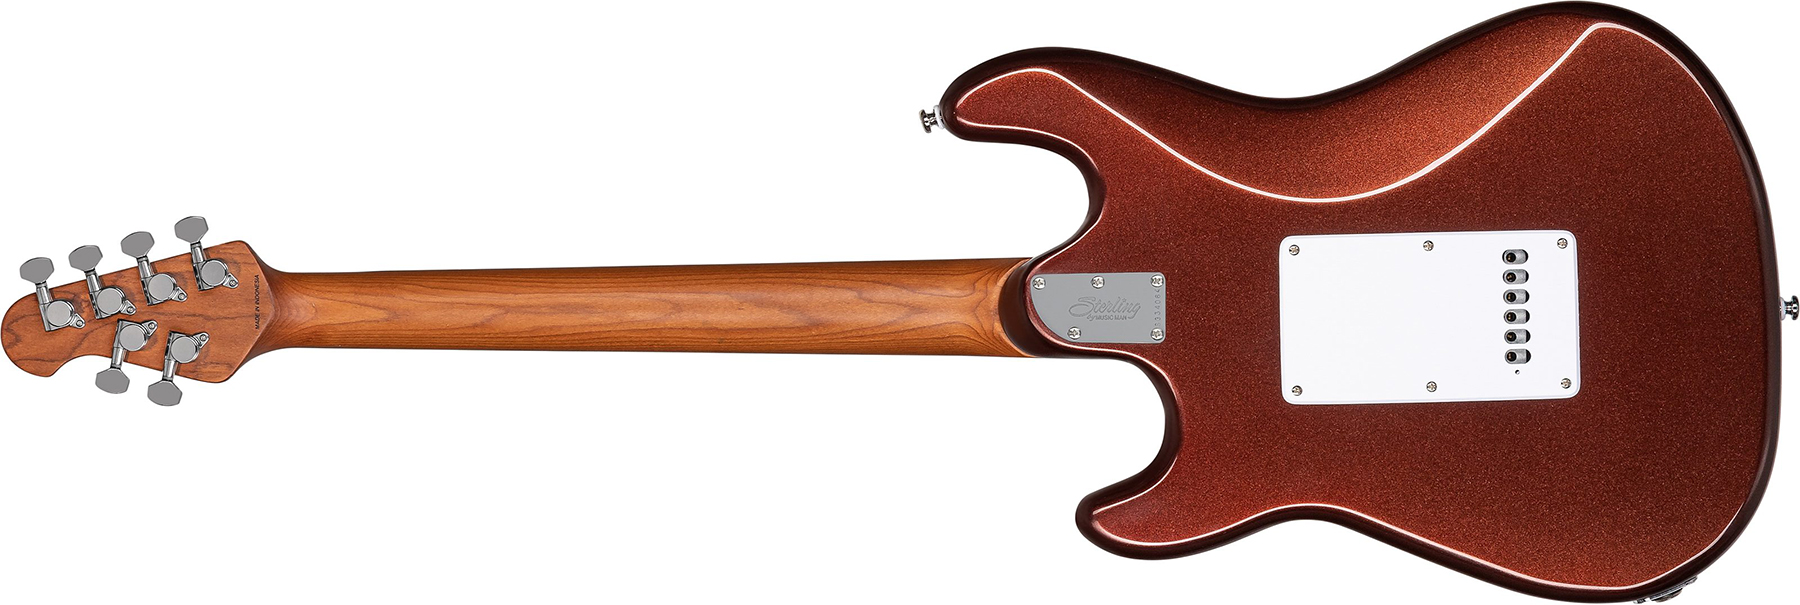 Sterling By Musicman Cutlass Ct50hss Trem Rw - Dropped Copper - E-Gitarre in Str-Form - Variation 1